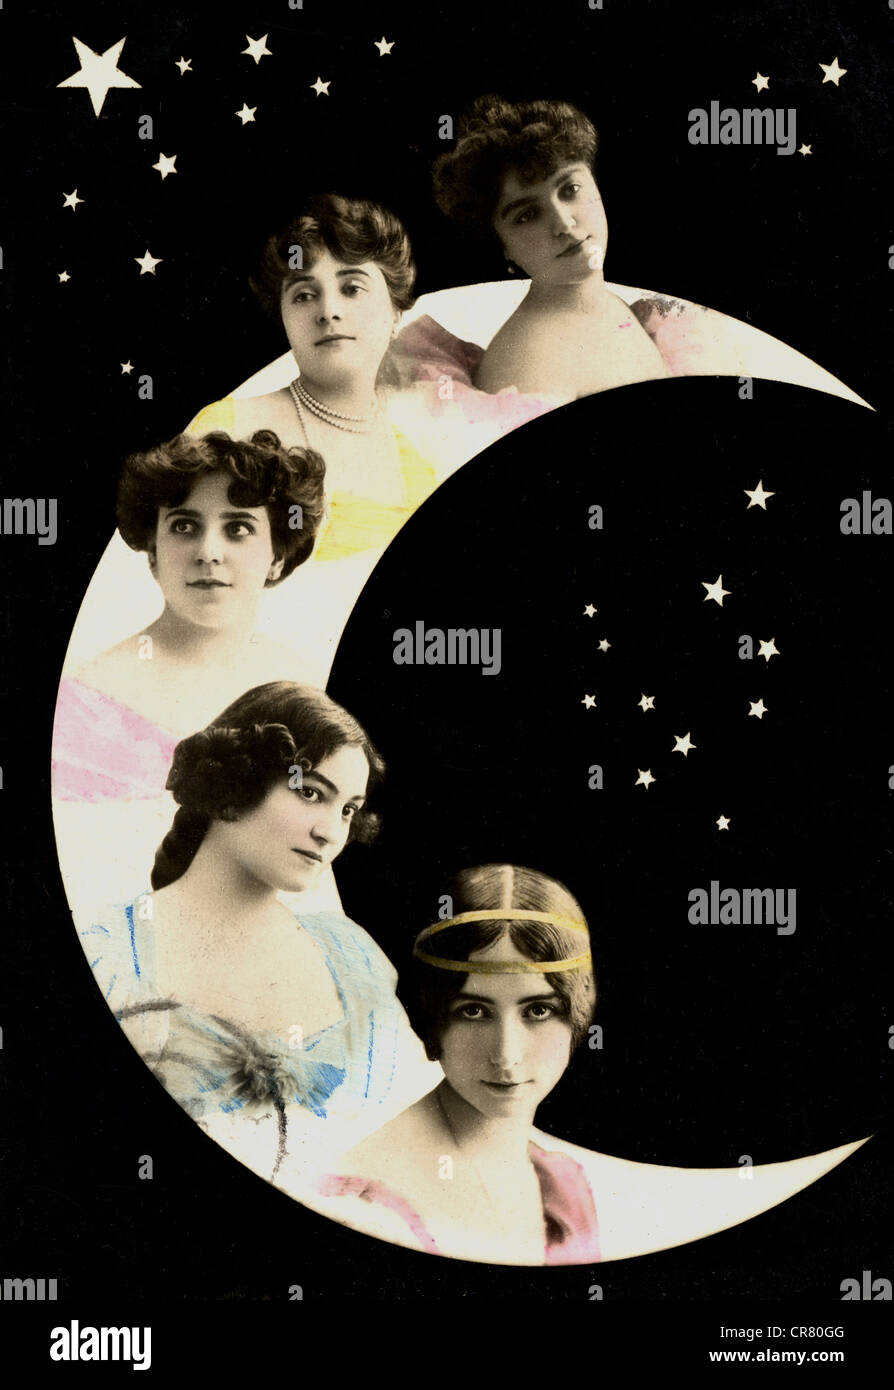 Women's portraits on the moon, historical illustration, 1905 Stock Photo